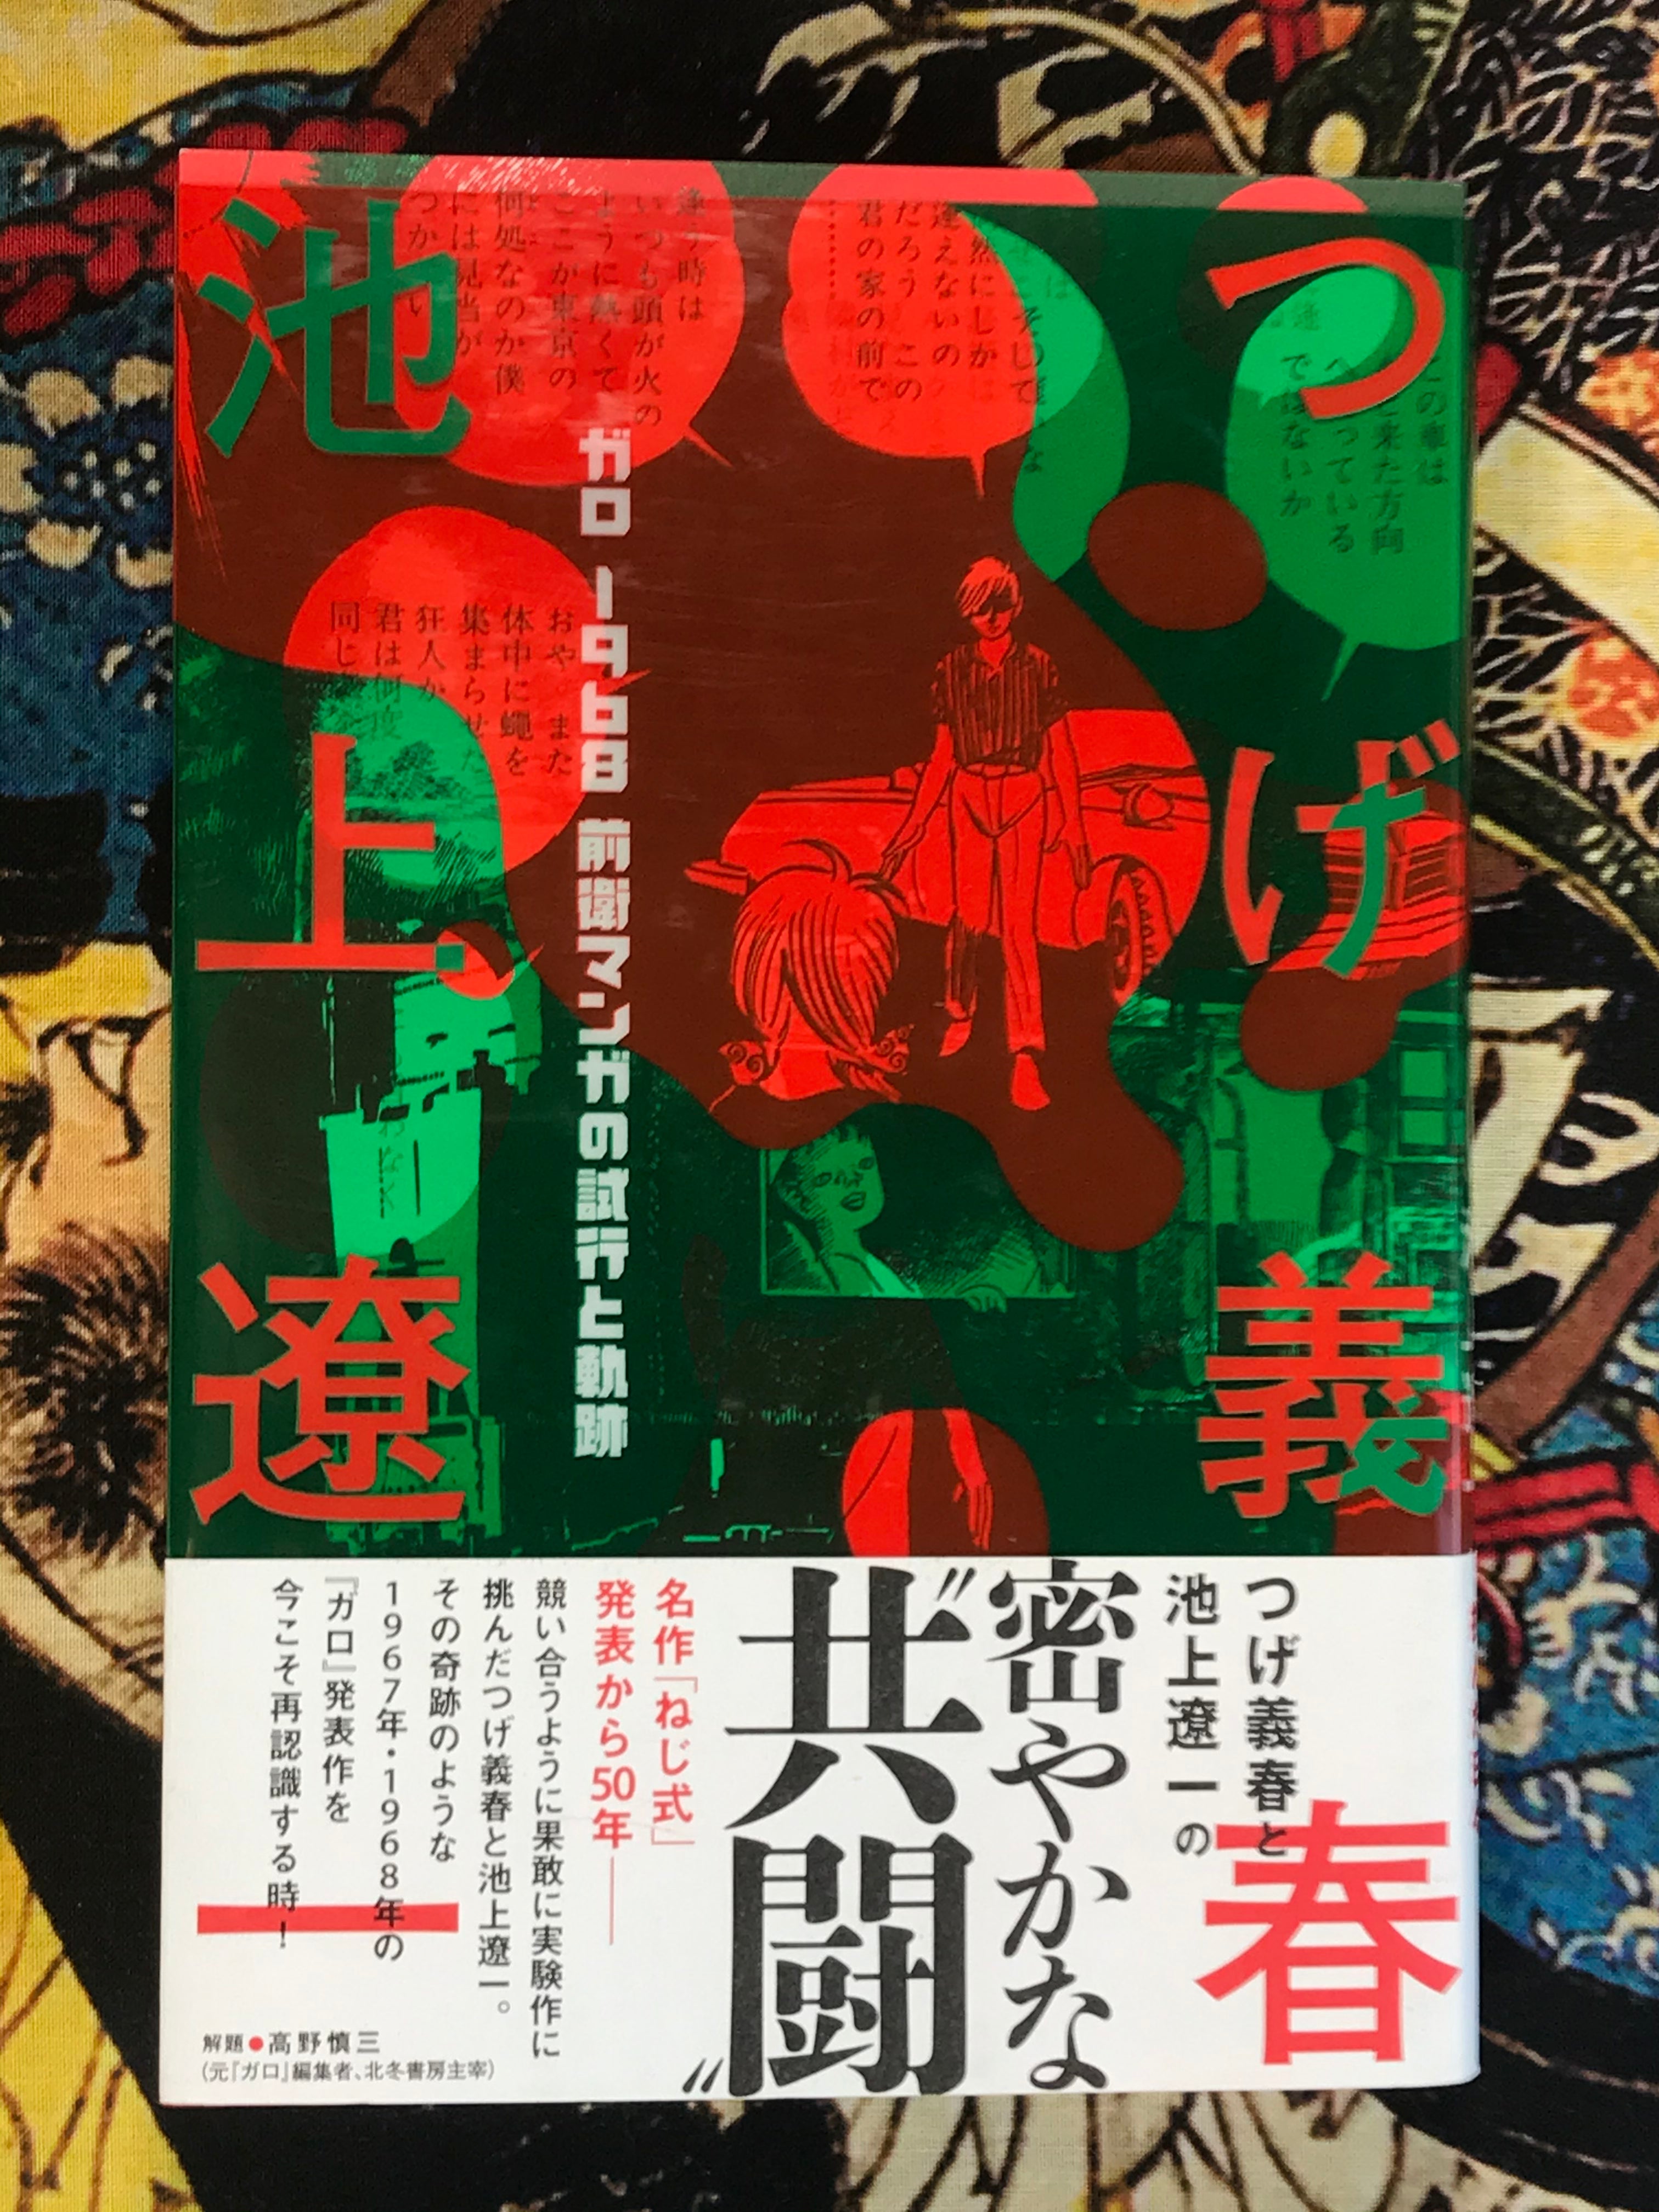 Garo 1968 The Trials and Trajectory of Avant Garde Manga by Yoshiharu Tsuge & Ryoichi Ikegami